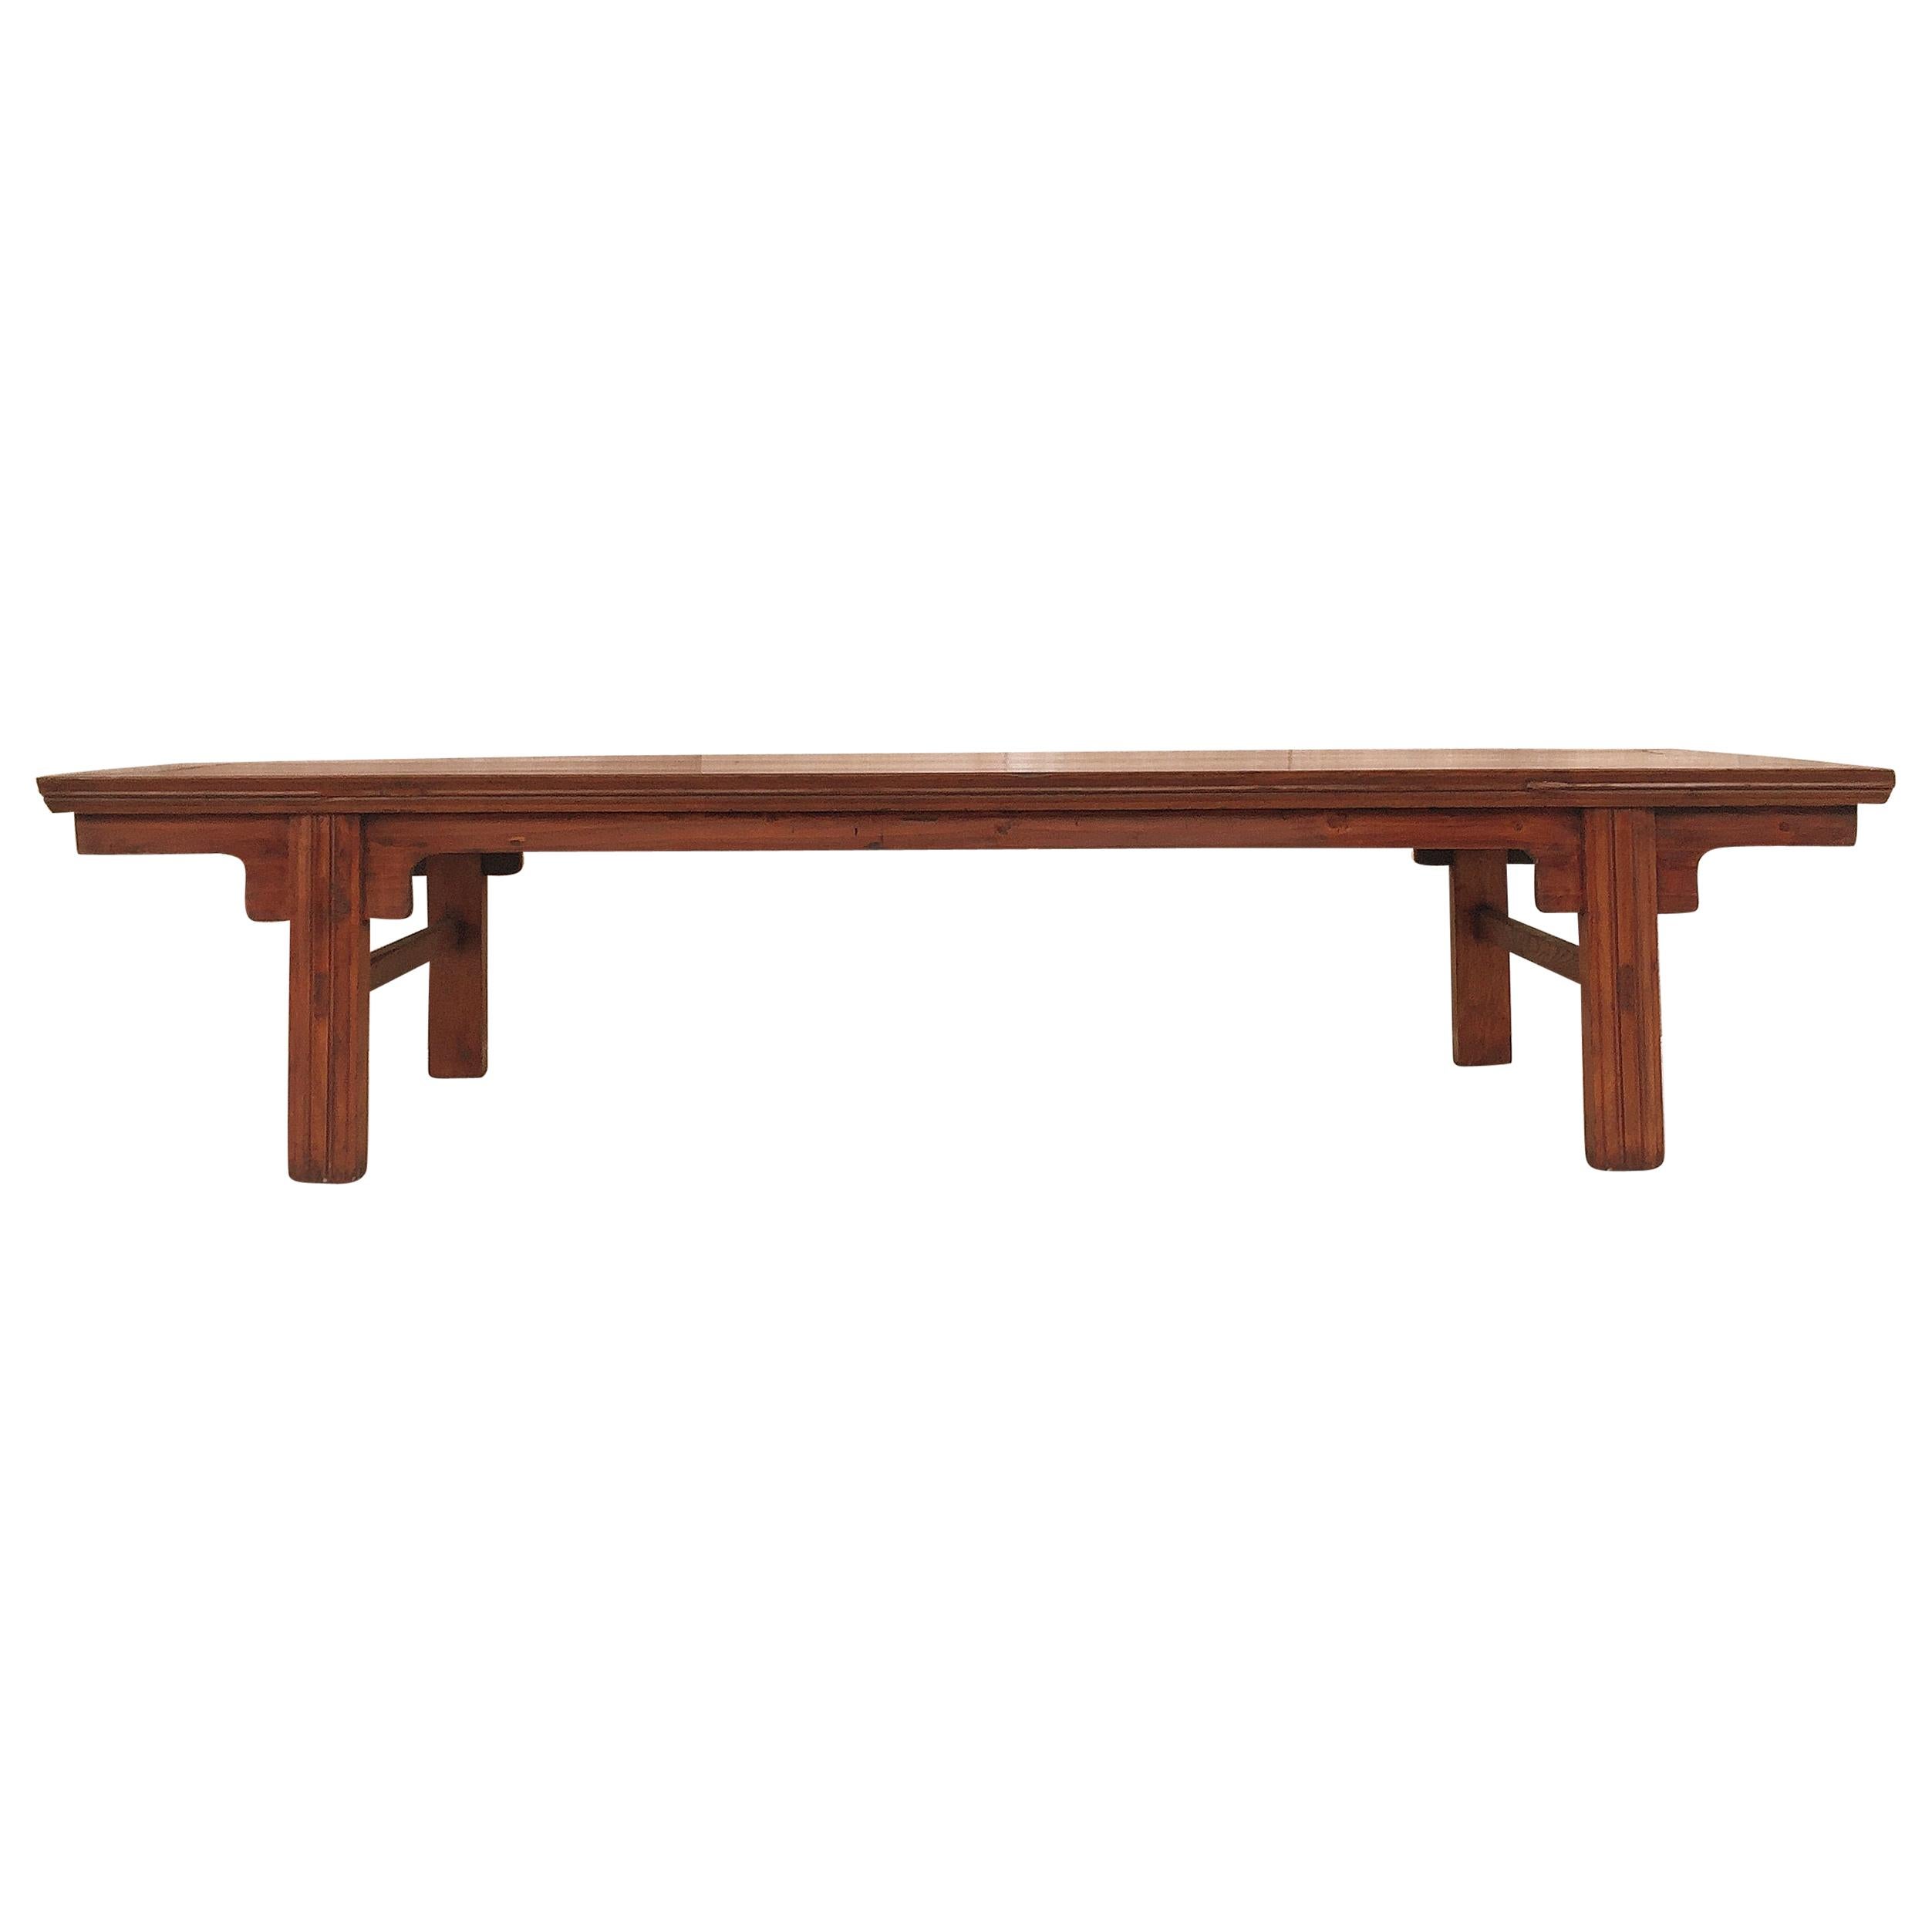 Large Jumu Wood Low Table